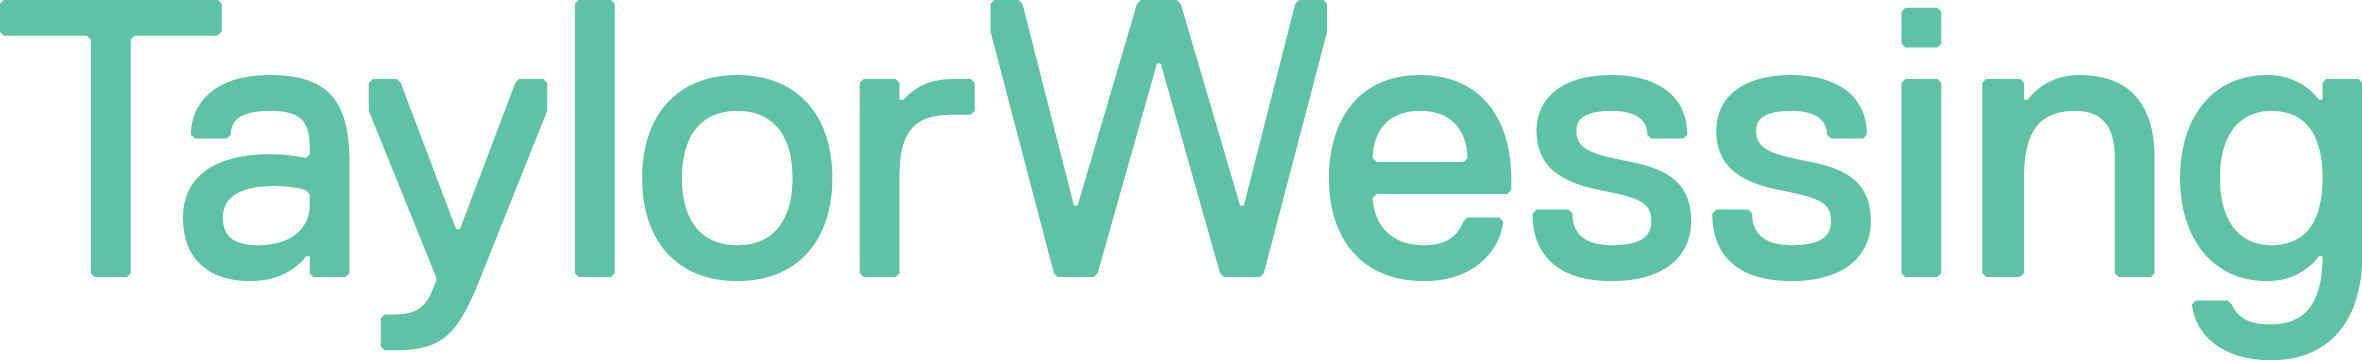 Logo Taylor Wessing green